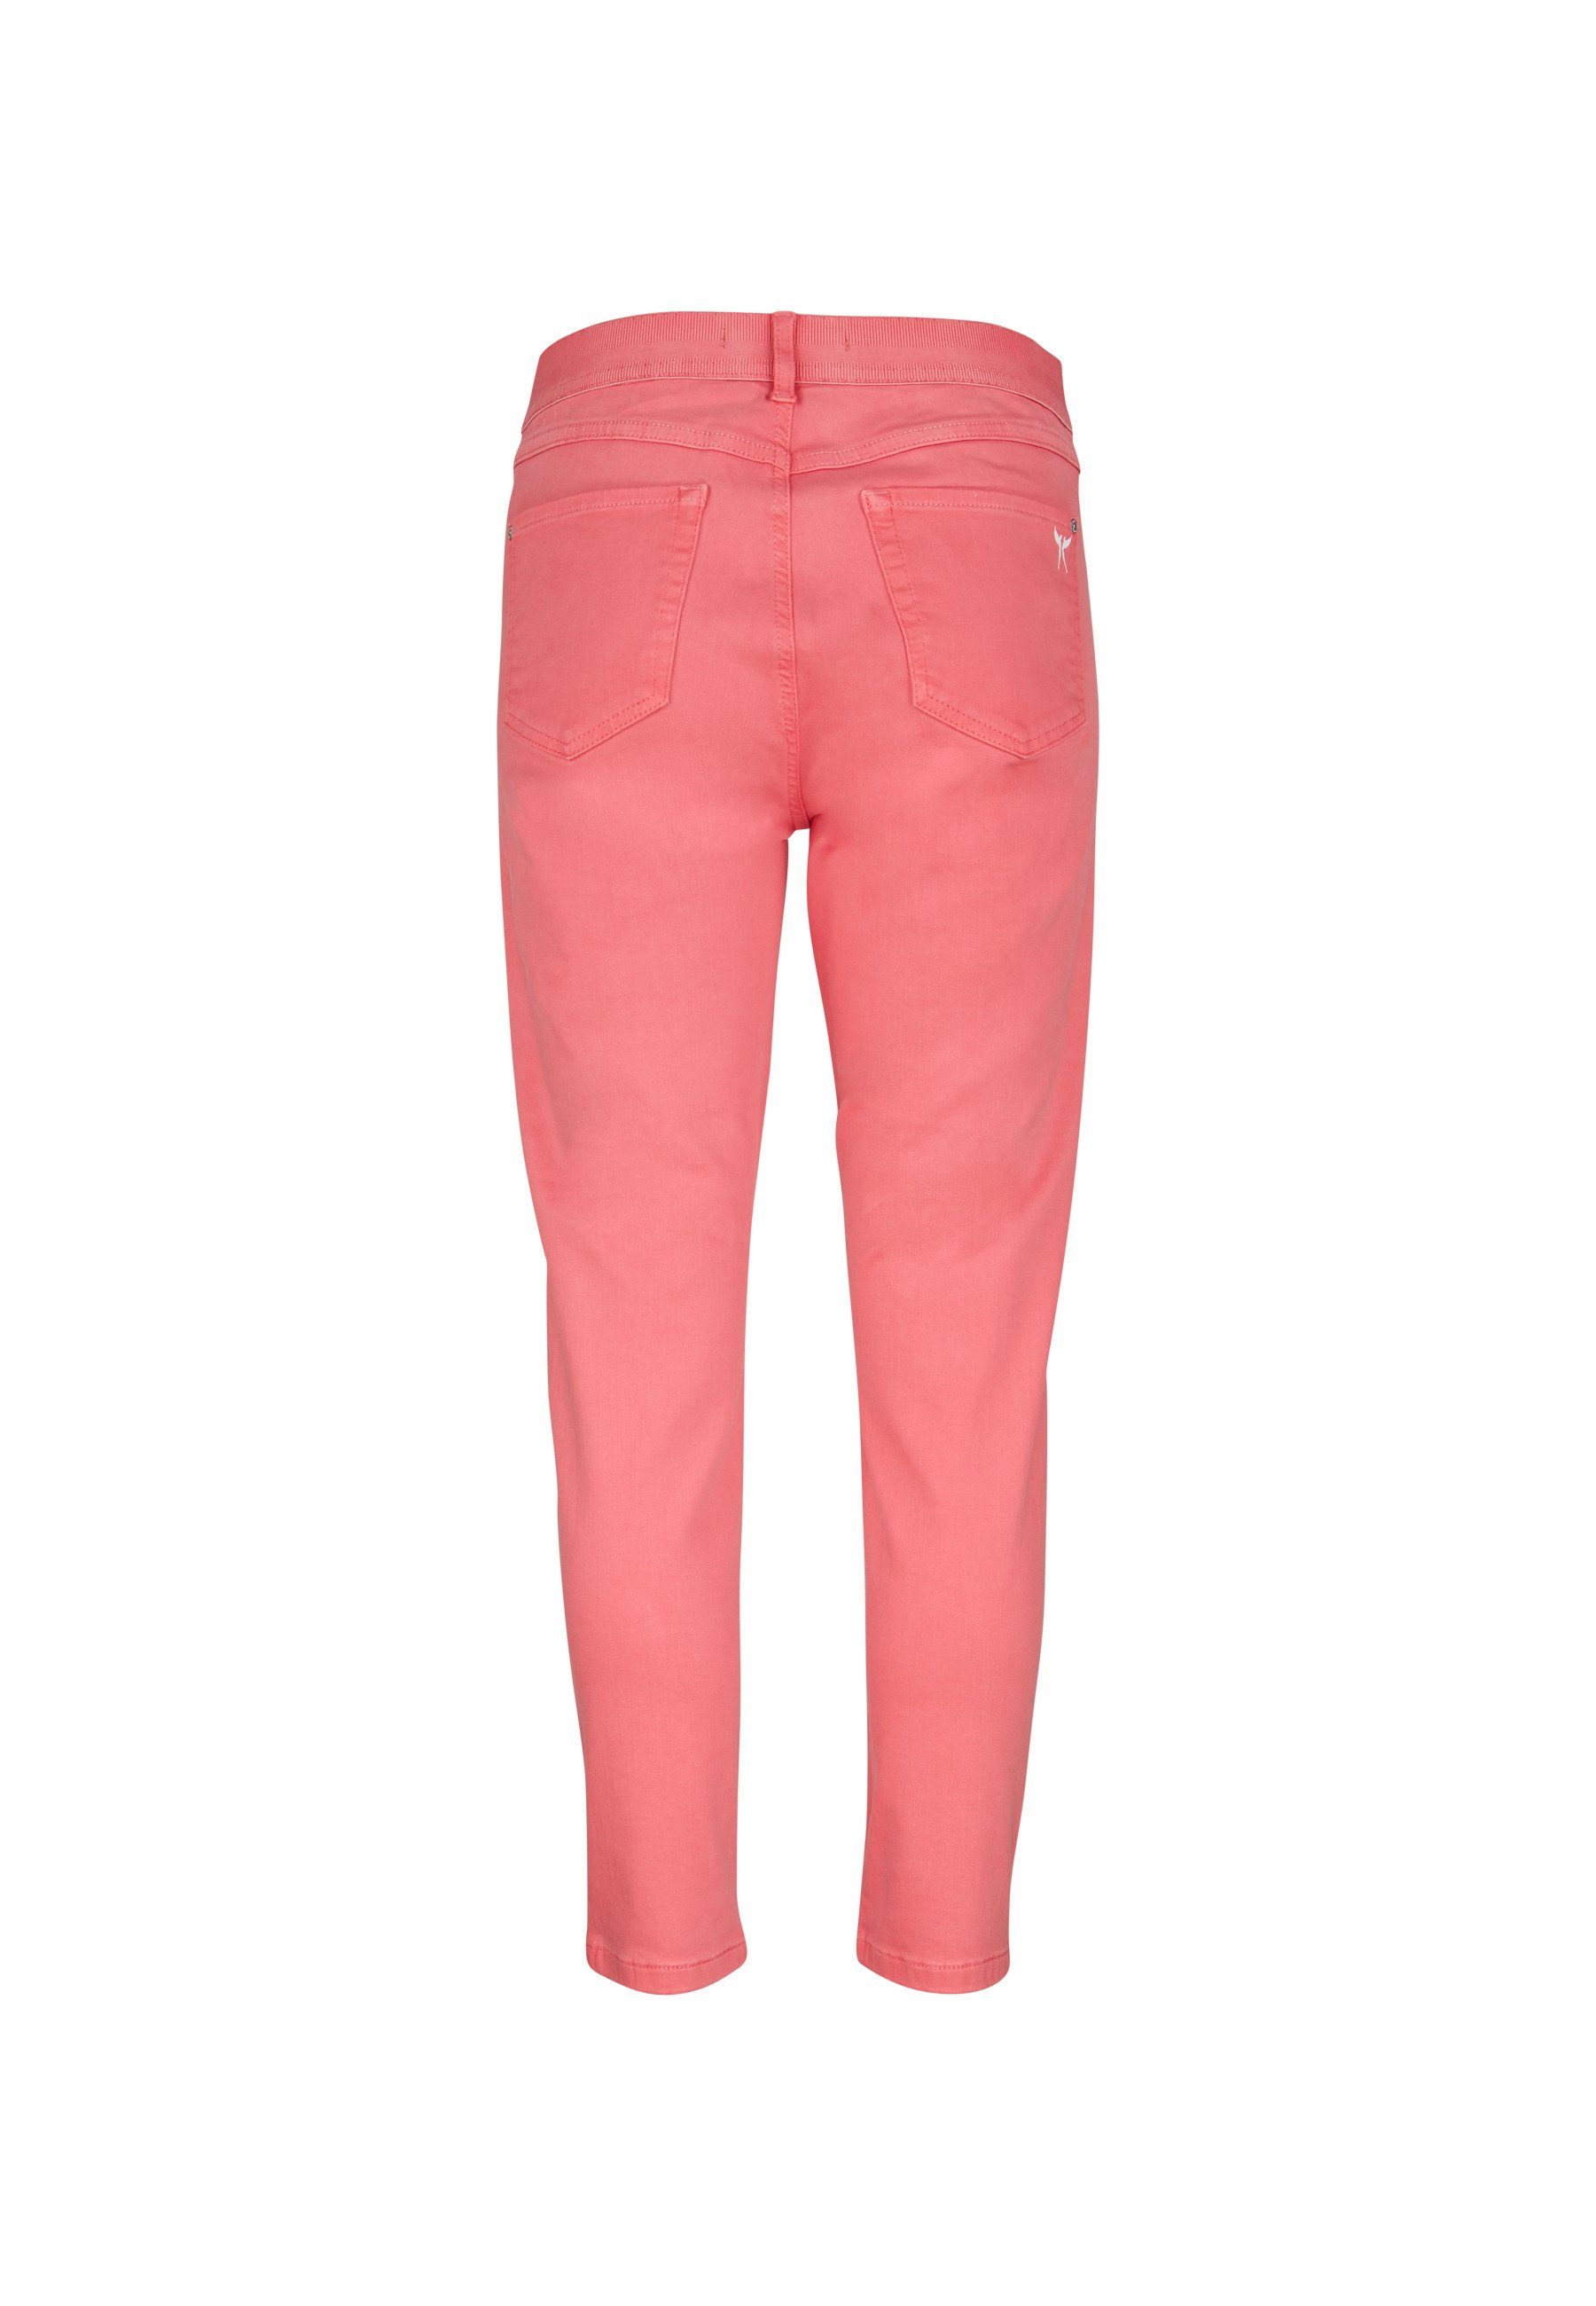 ANGELS Jeans Slim-fit-Jeans Coloured mit Crop pink Denim mit OSFA Label-Applikationen